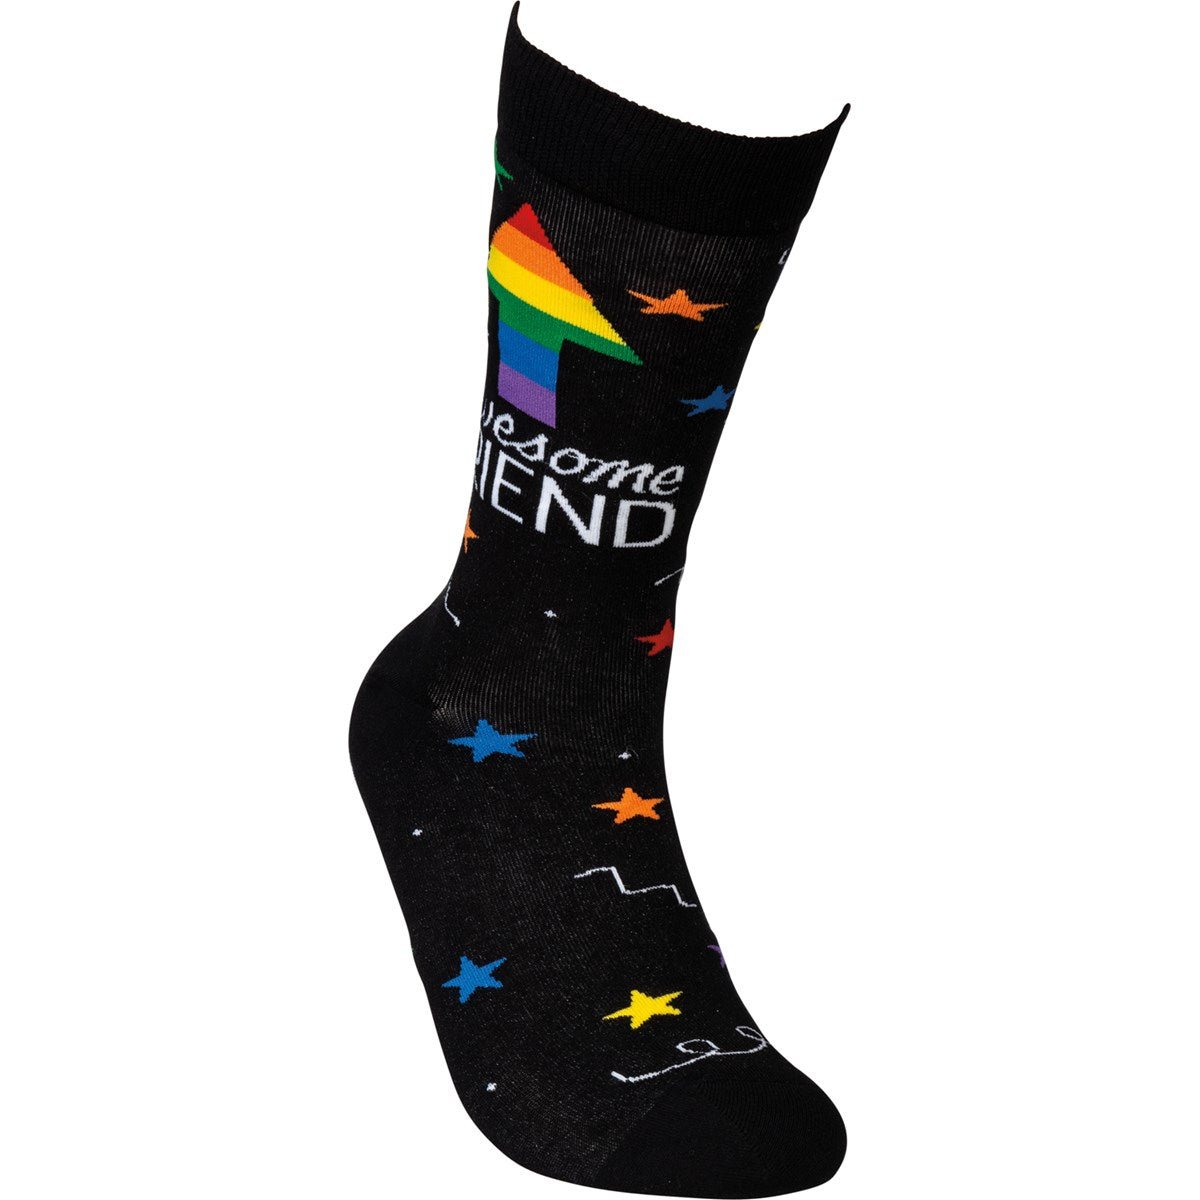 Awesome Friend Stars Patterned Socks Black Colorful Funny Novelty Socks